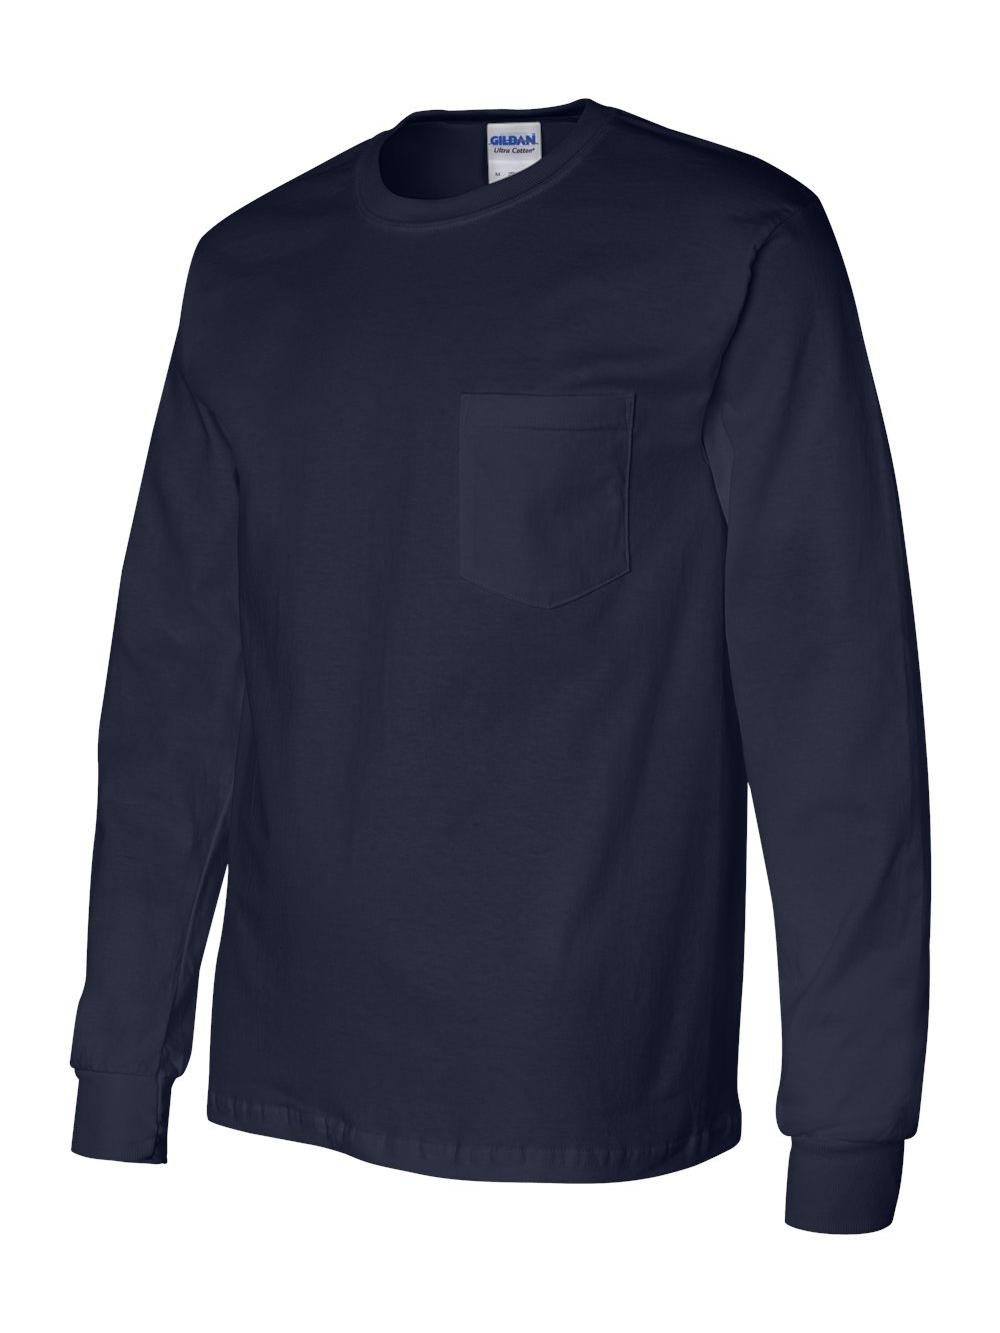 Gildan - Ultra Cotton Long Sleeve Pocket T-Shirt - 2410 - Navy - Size: L - image 1 of 3